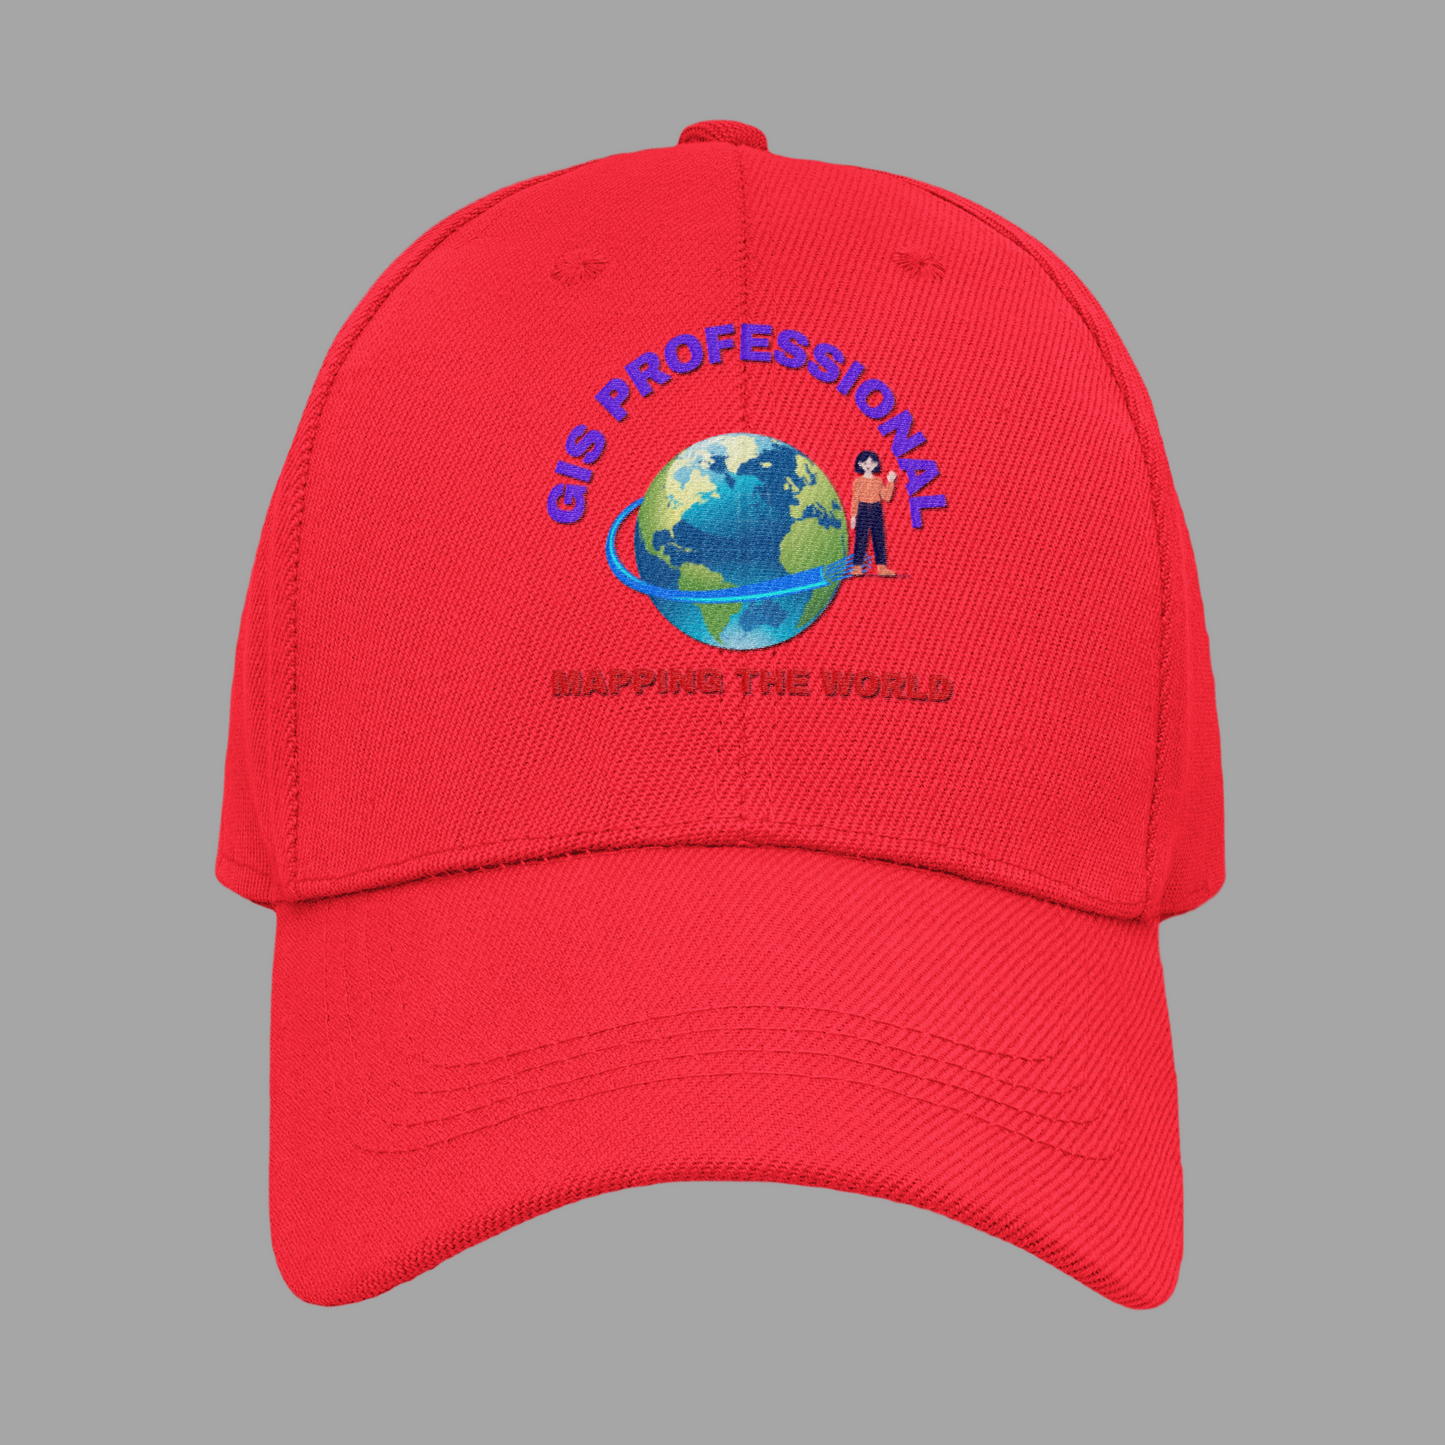 GIS PROFESSIONAL CAP